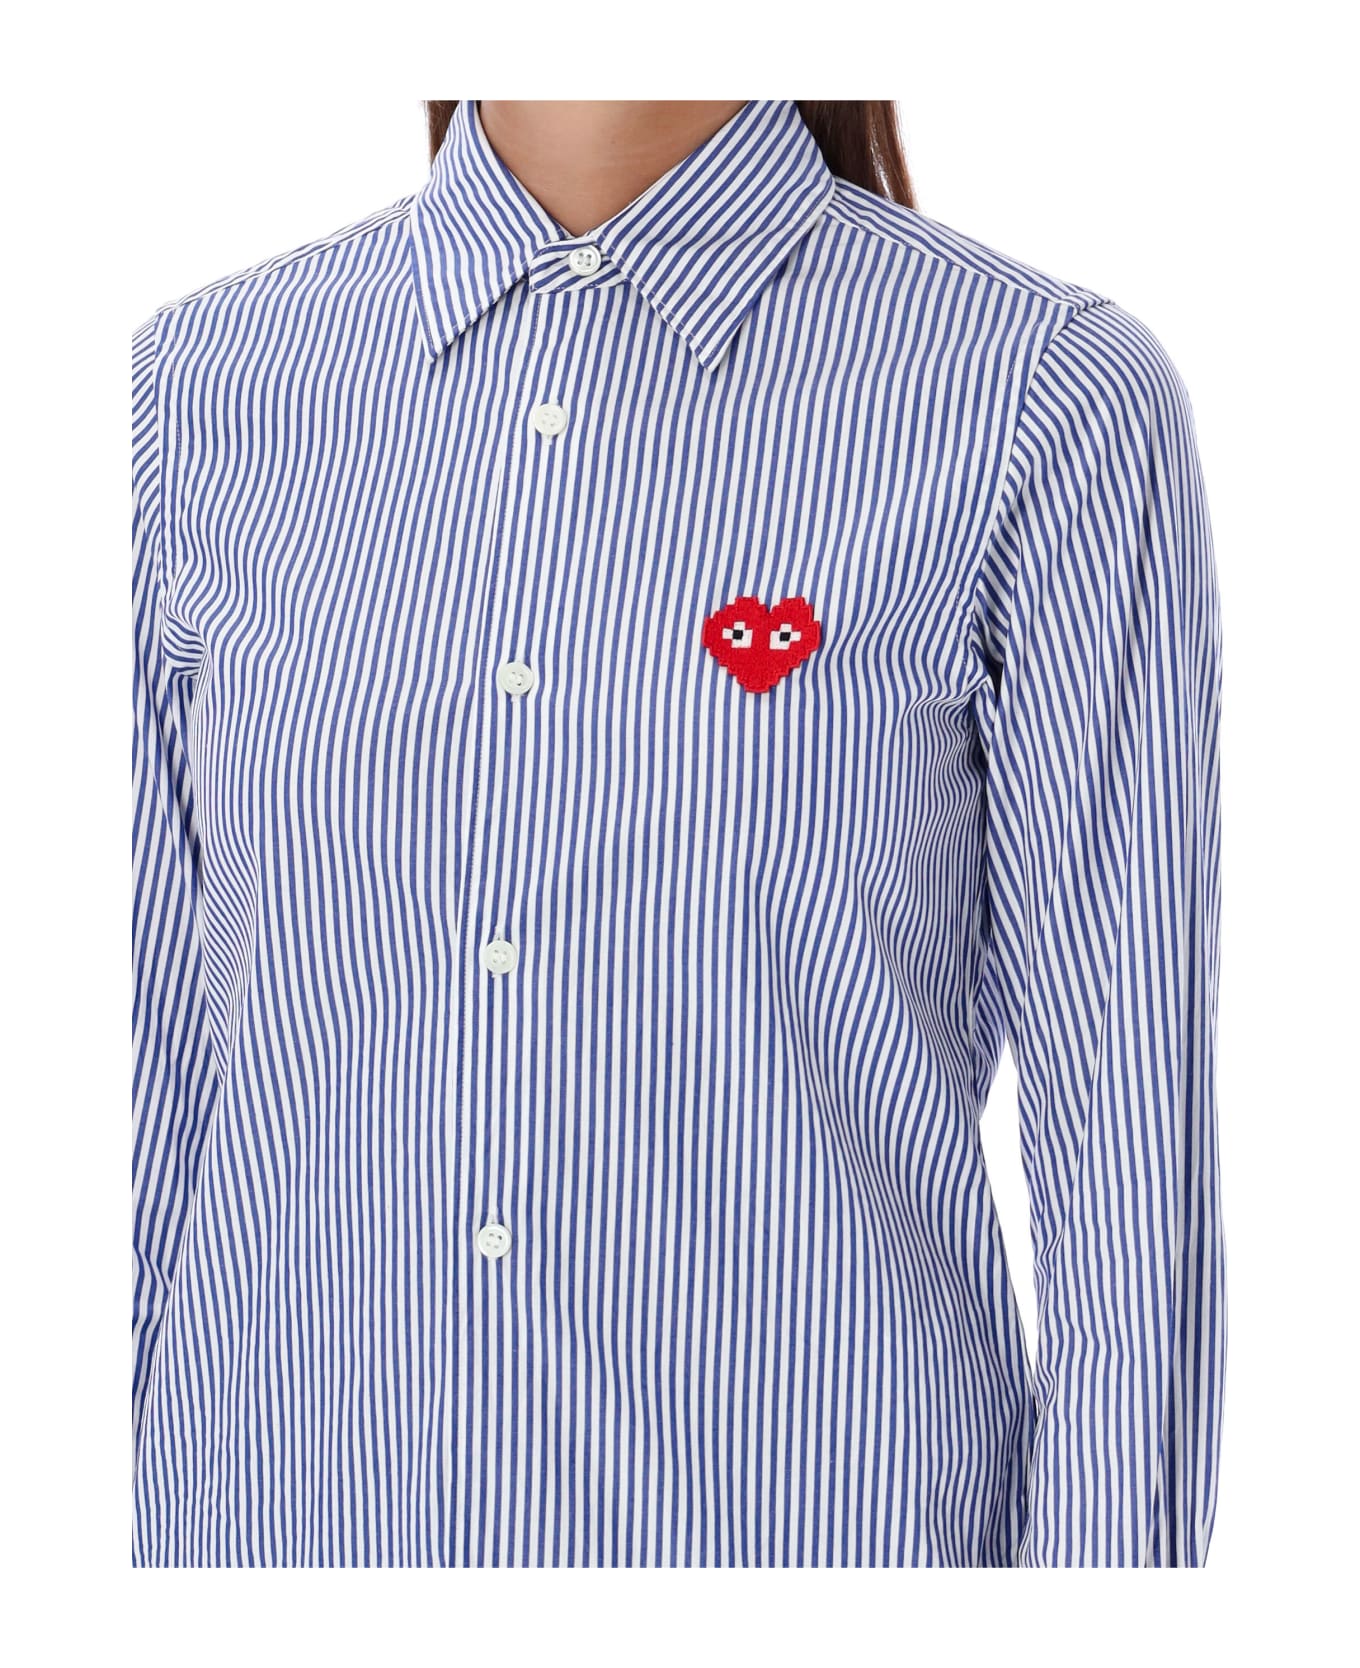 Comme des Garçons Play Pixel Red Heart Shirt - BLUE/WHITE STRIPES シャツ